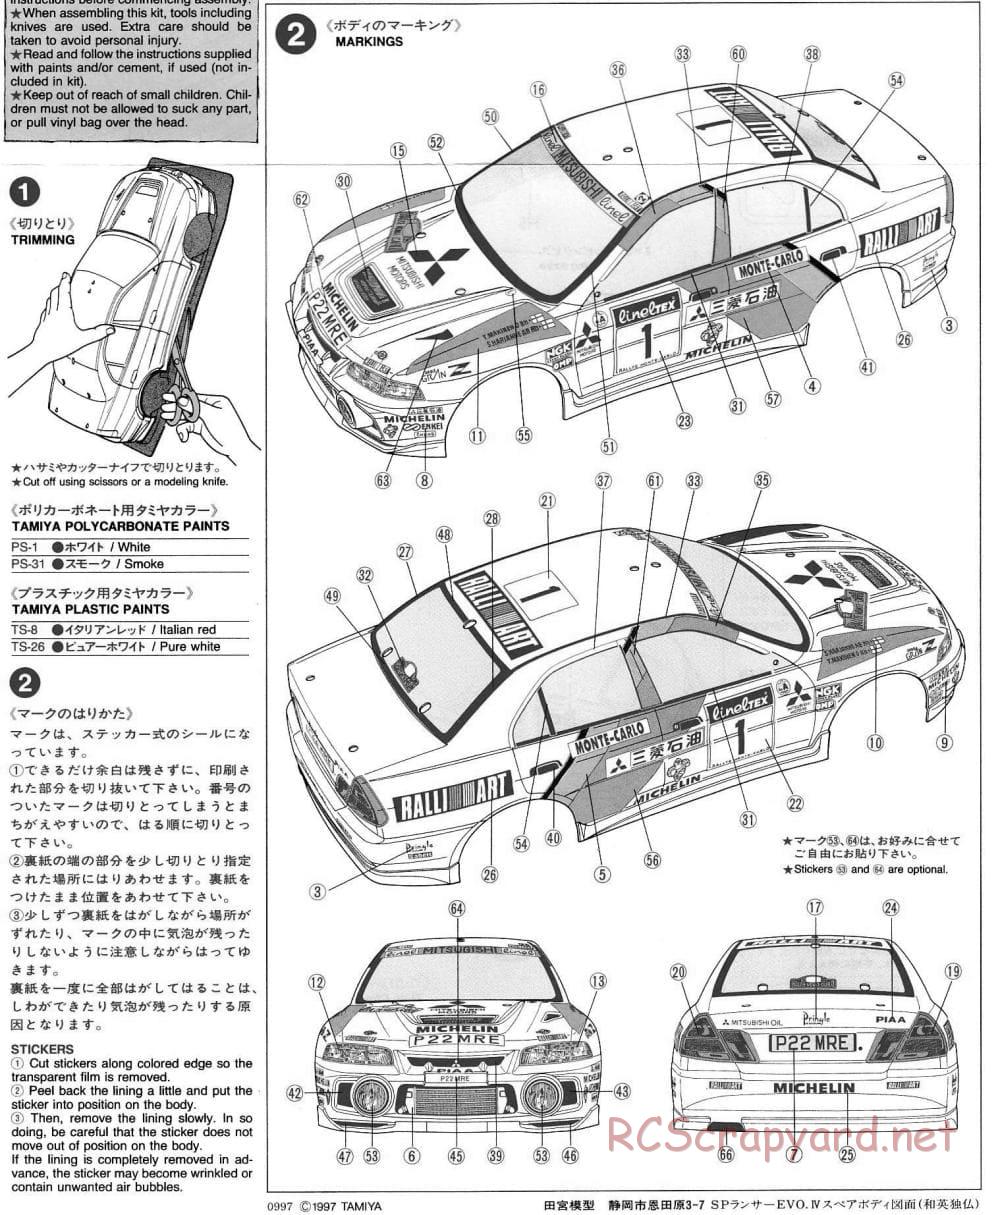 Tamiya - Mitsubishi Lancer Evo IV Monte-Carlo - TL-01 Chassis - Body Manual - Page 2